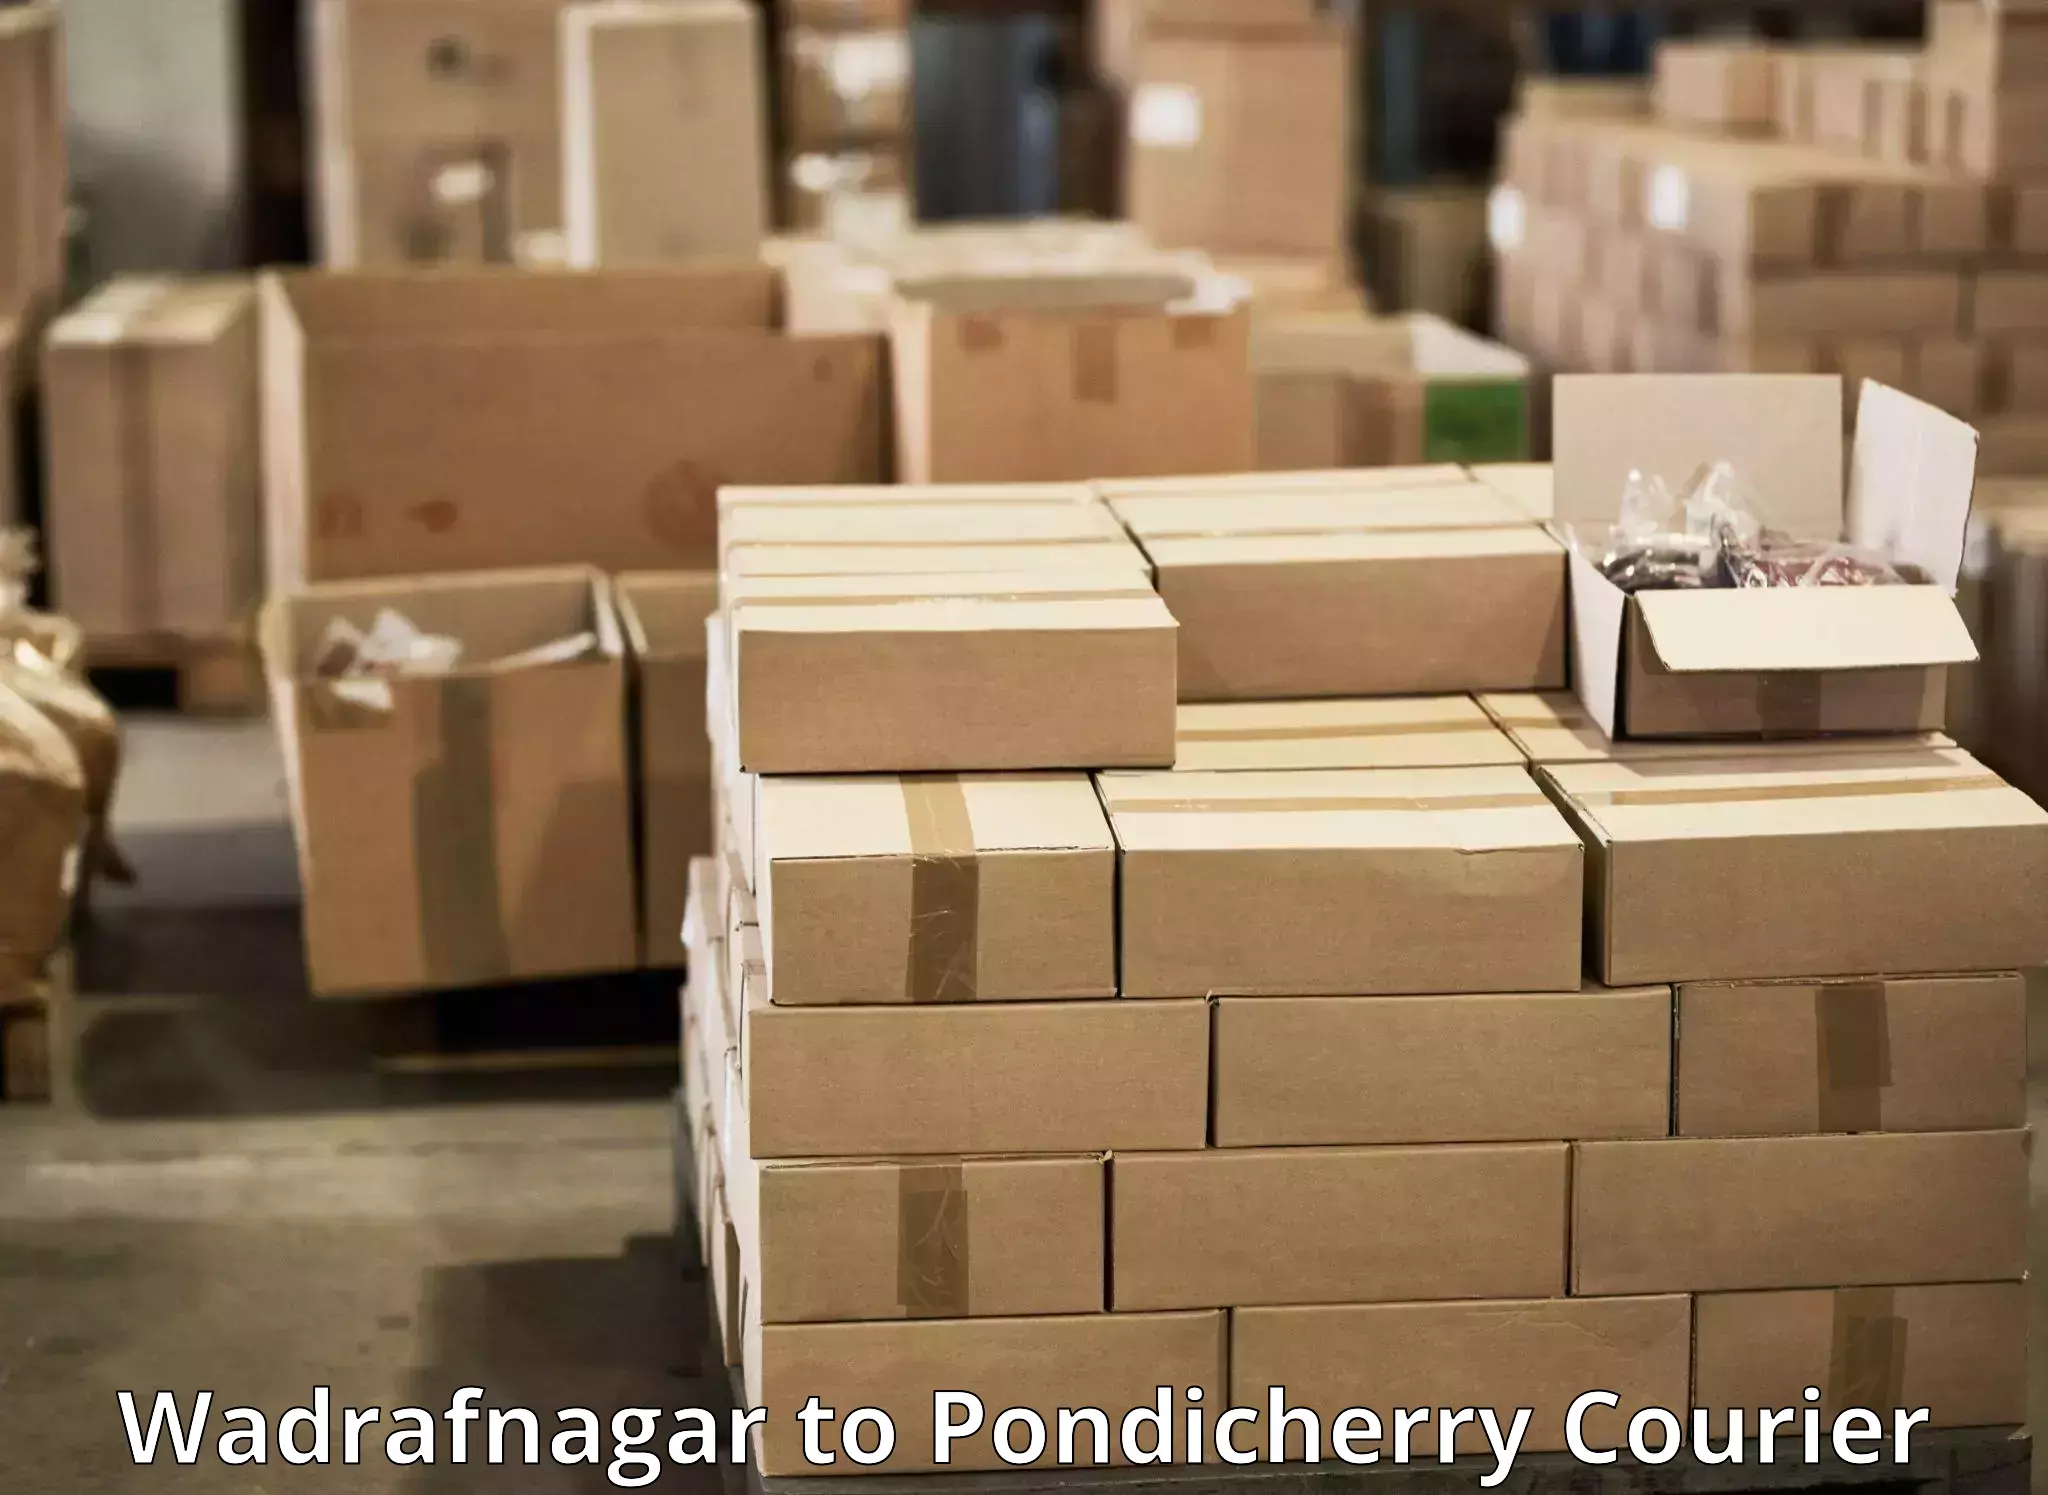 Customized shipping options Wadrafnagar to Pondicherry